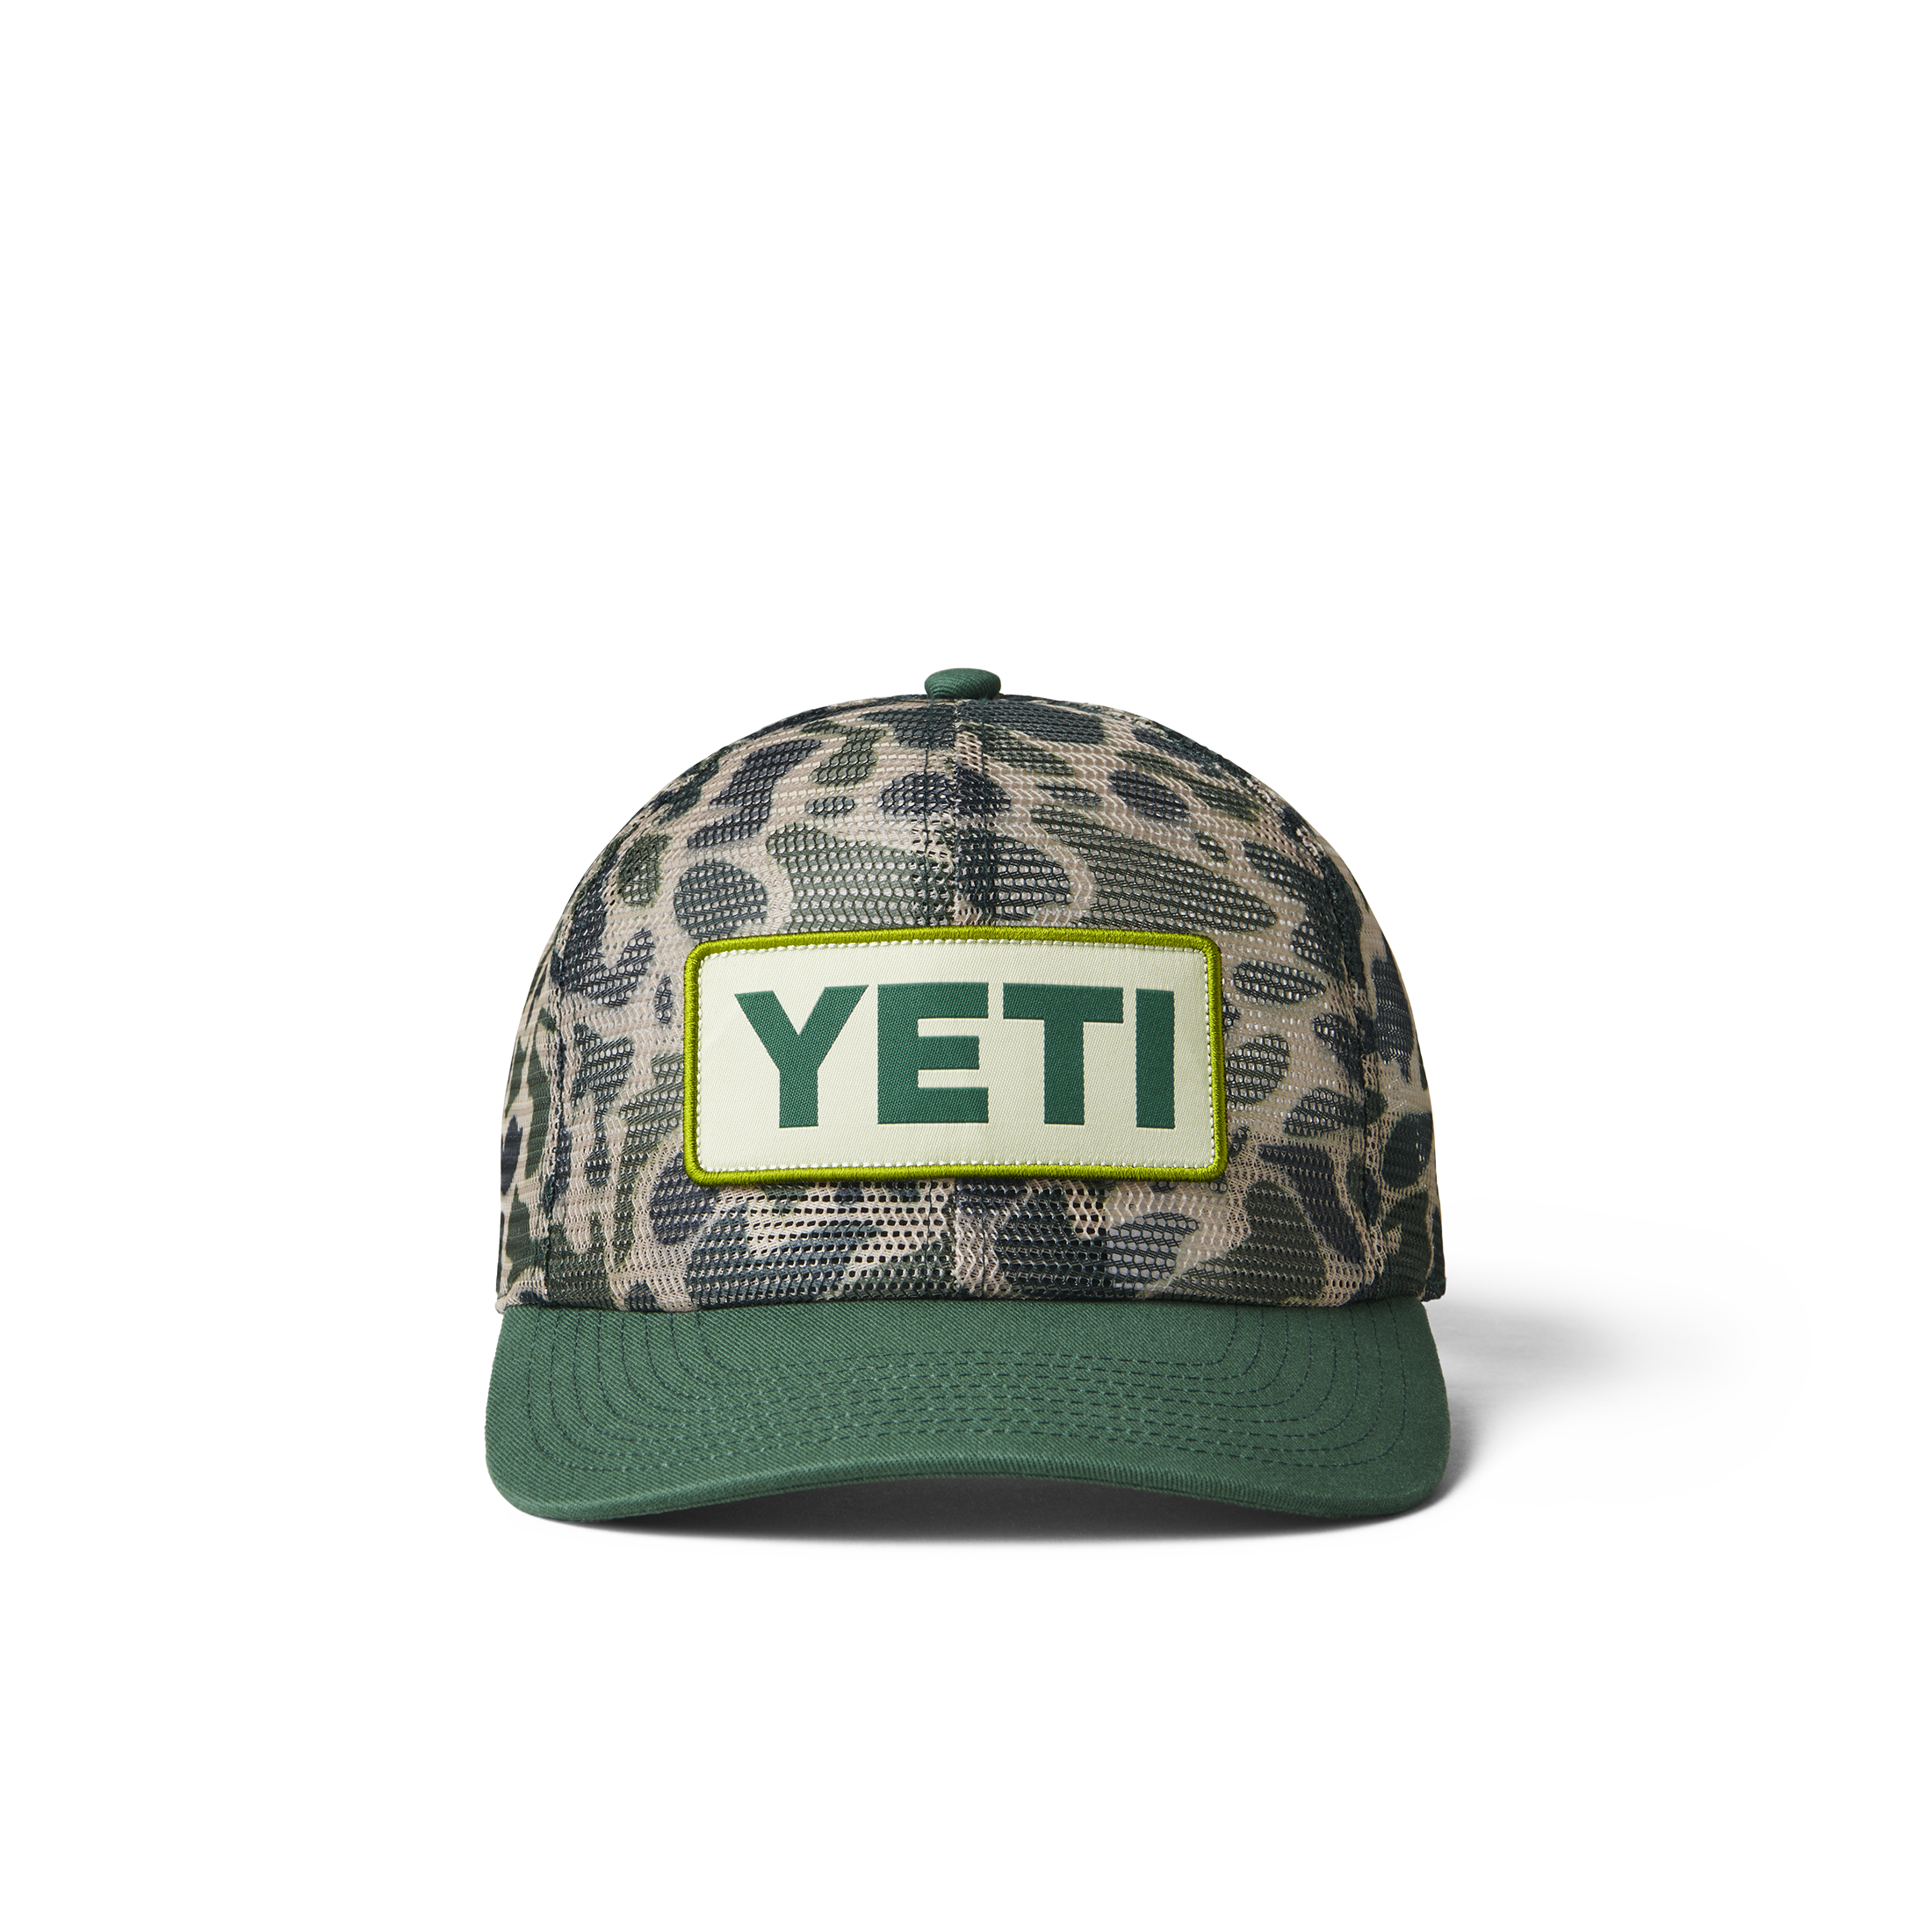 yeti hats